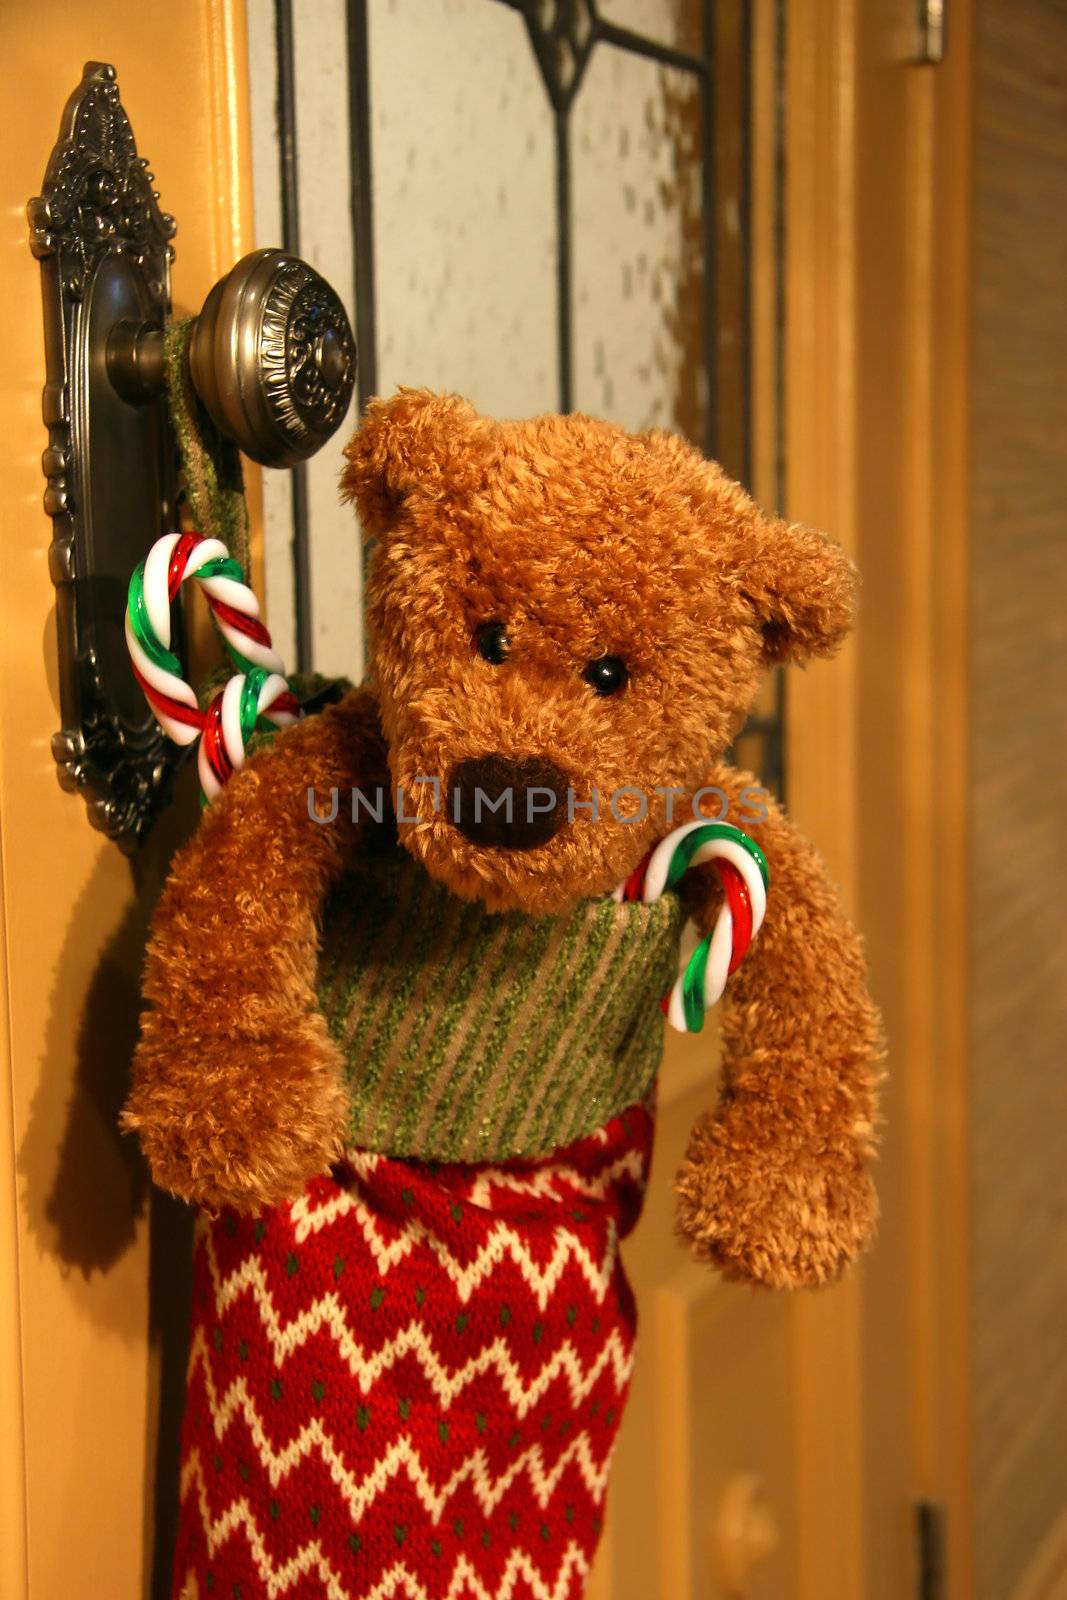 Stuffed stocking waiting for Christmas